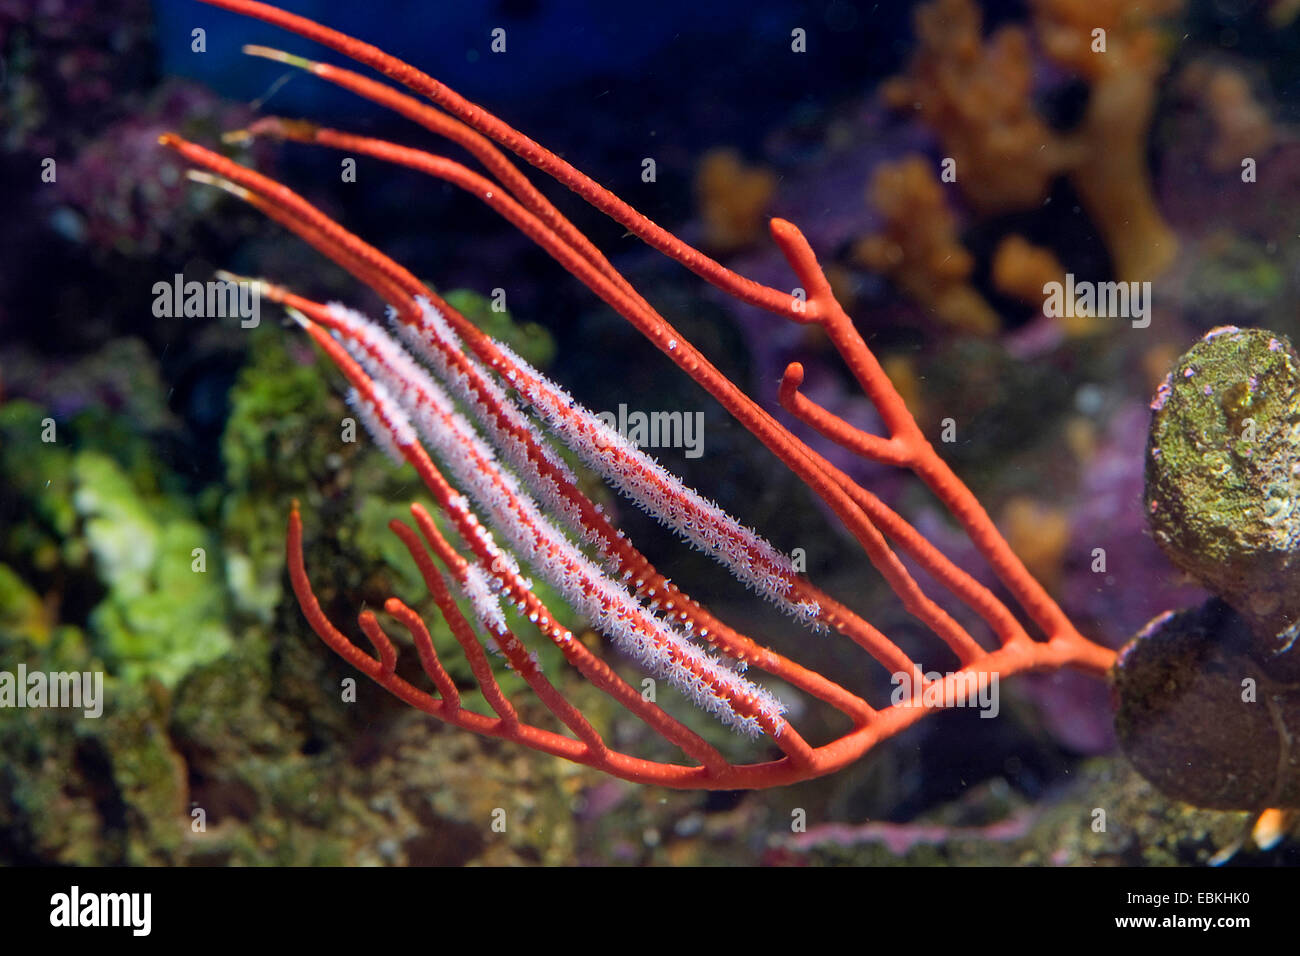 Red sea whips (Ctenocella pectinata), close-up view Stock Photo